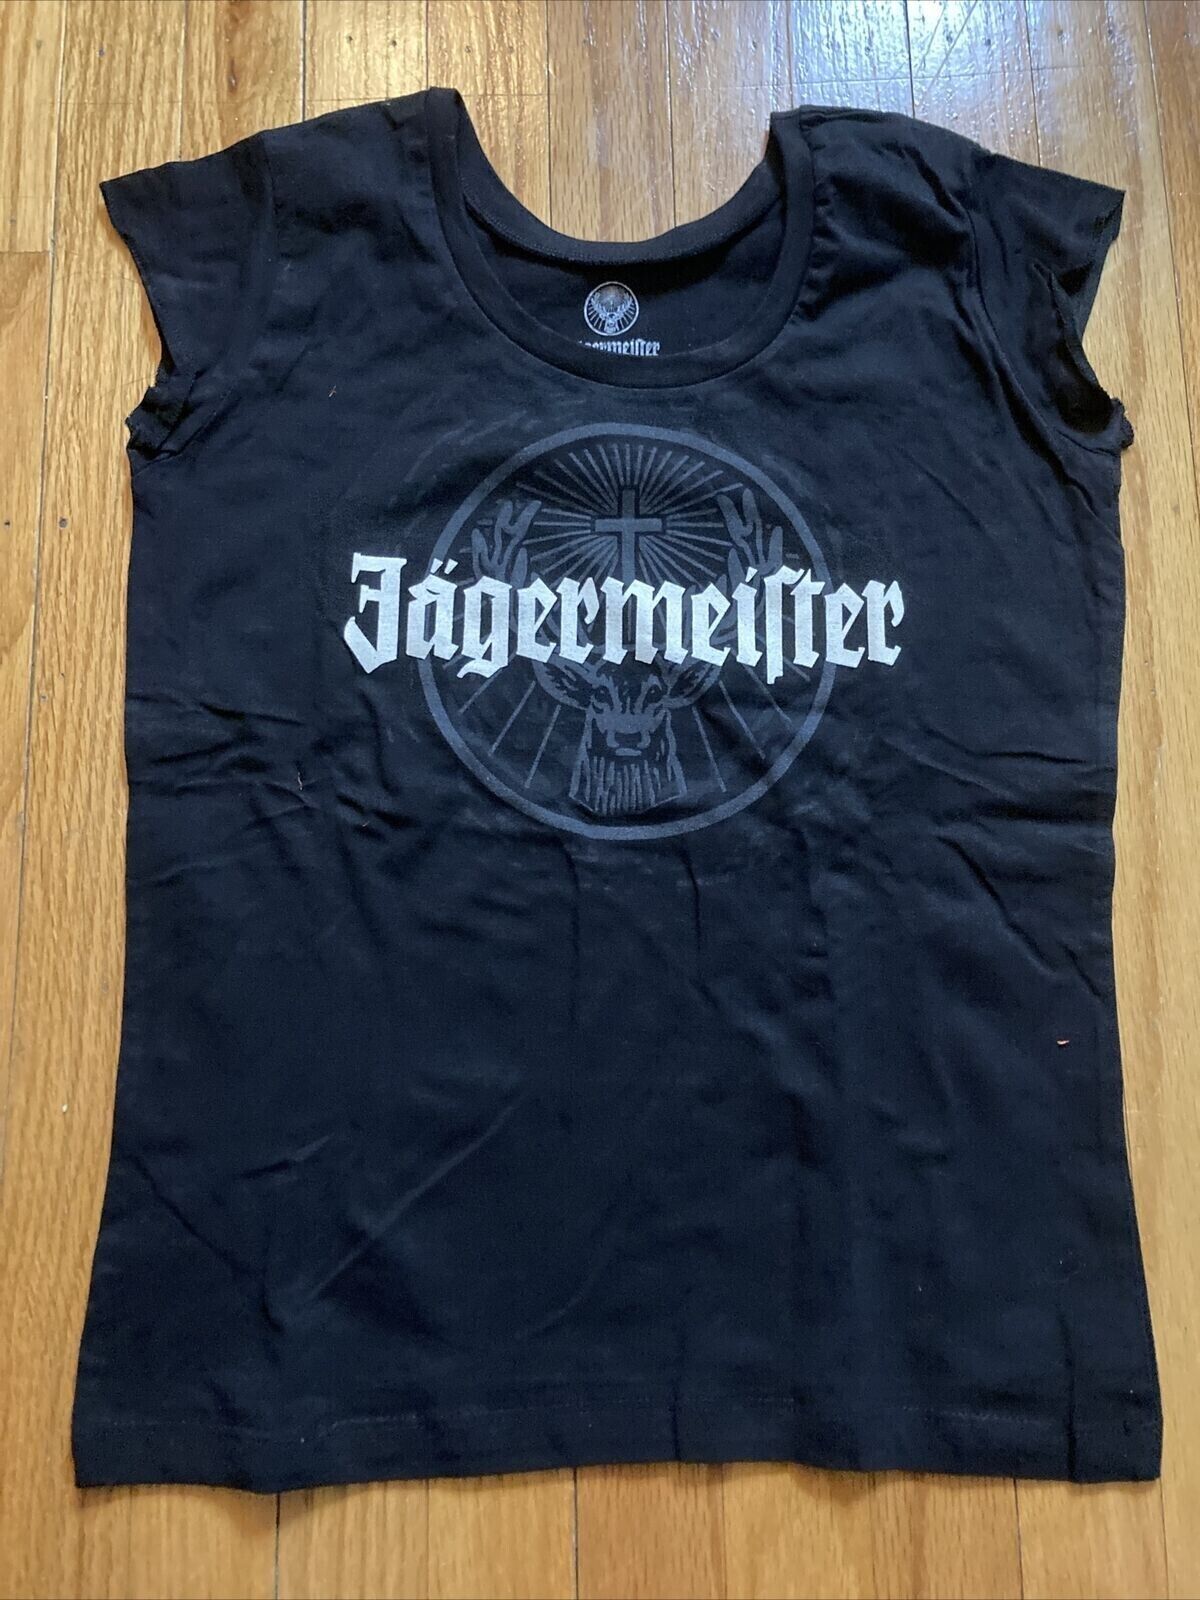 Women's Jagermeister TShirt Black Graphic Jager Logo Tee Top